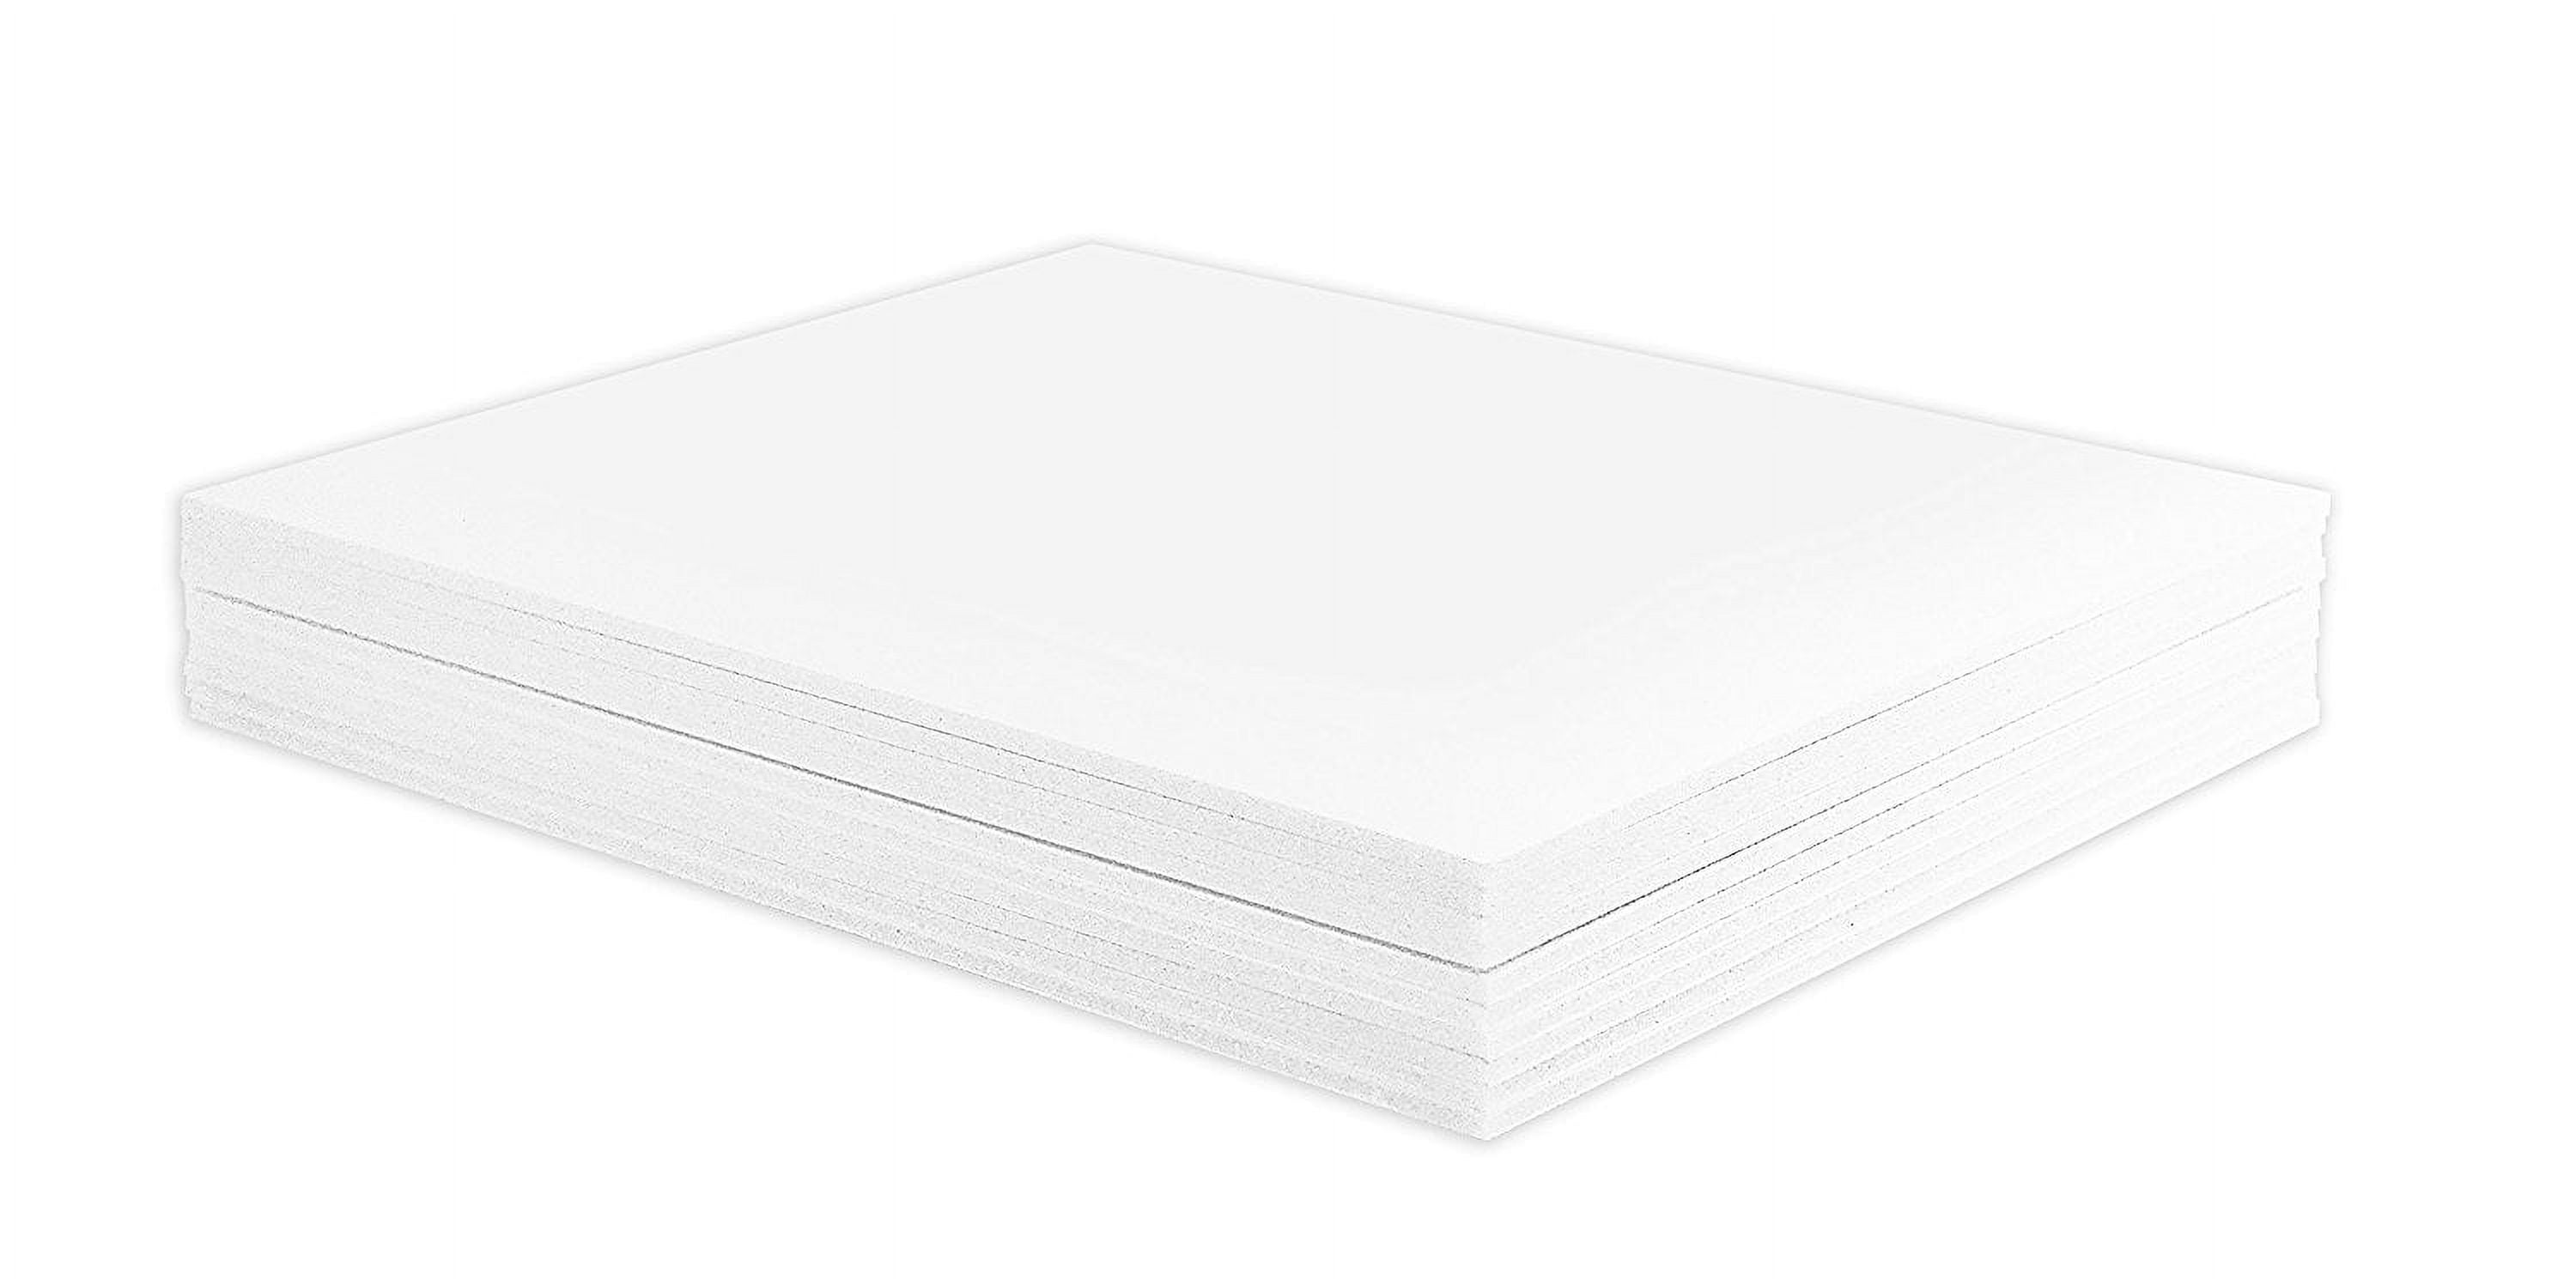 Elmer's Premium Foam Tri-Fold Display Board, 3/16” Thick, 36 x 48, White  